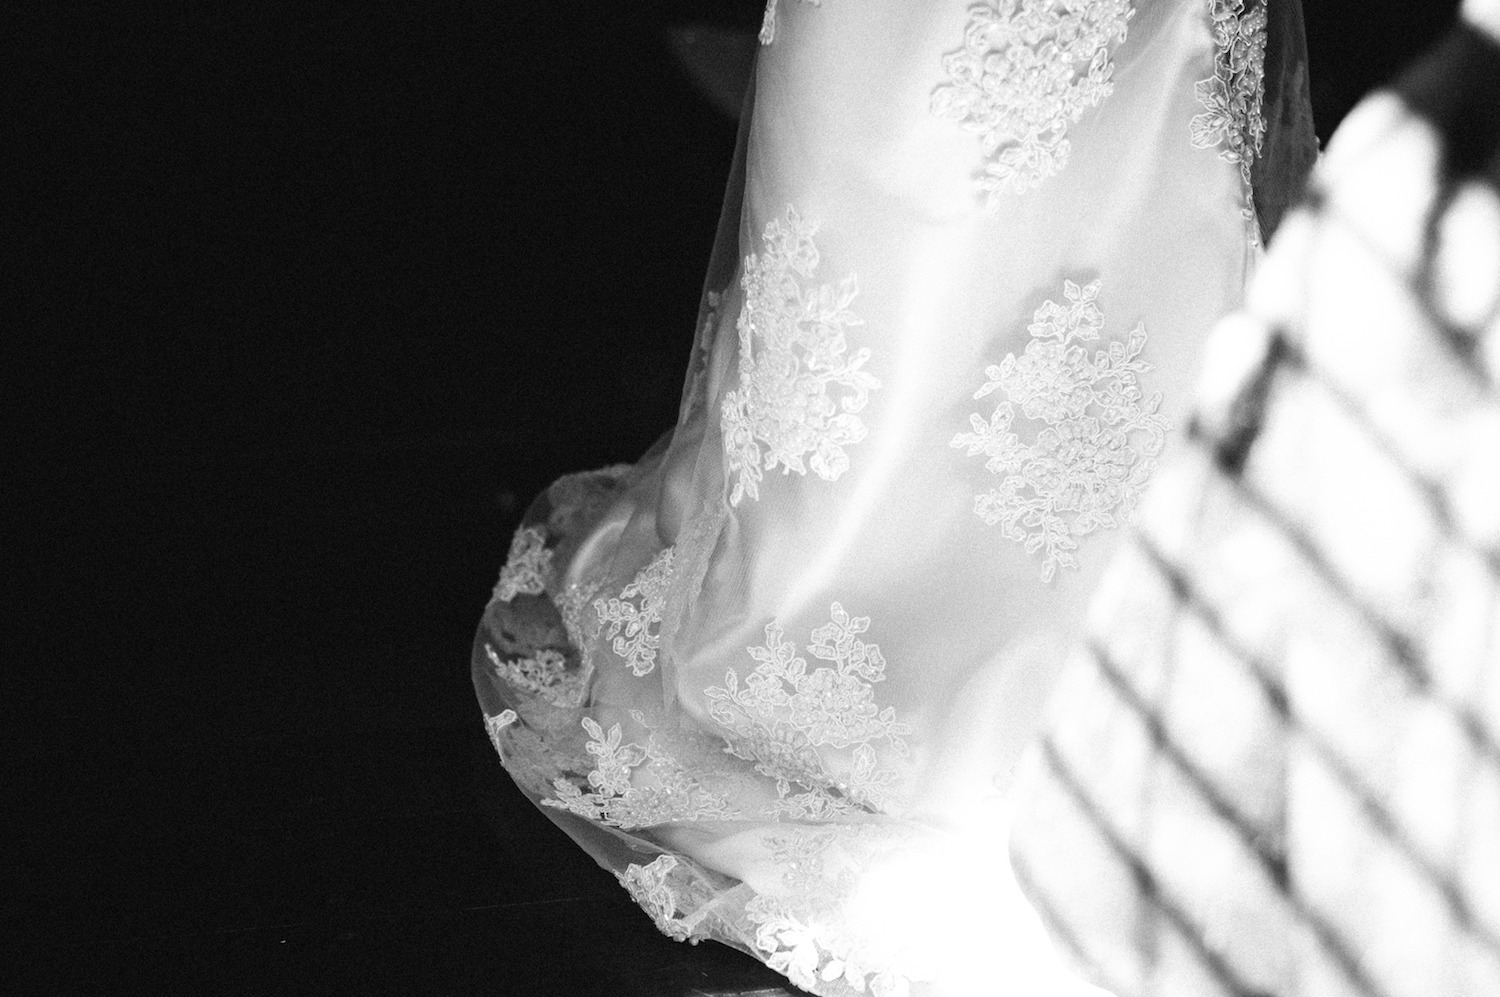 Perth Wedding Photography Aimee Rory Handmade Dress Details 